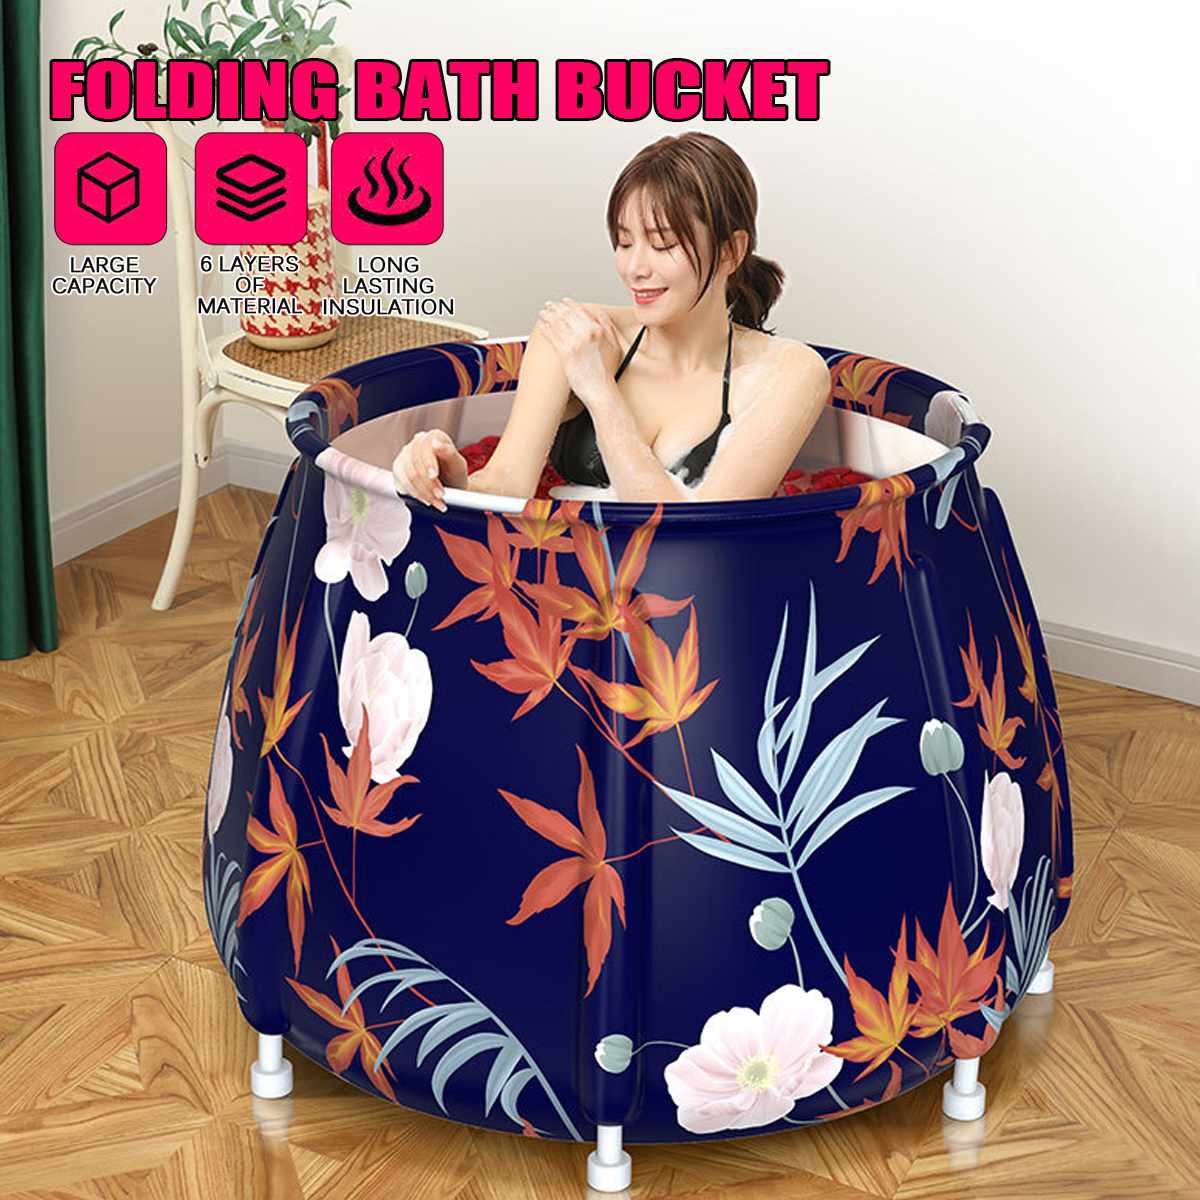 6-layer Bathtub Folding Bath Bucket Foldable Large Adult Tub Baby Swimming Pool Insulation Separate Family Bathroom SPA Tub